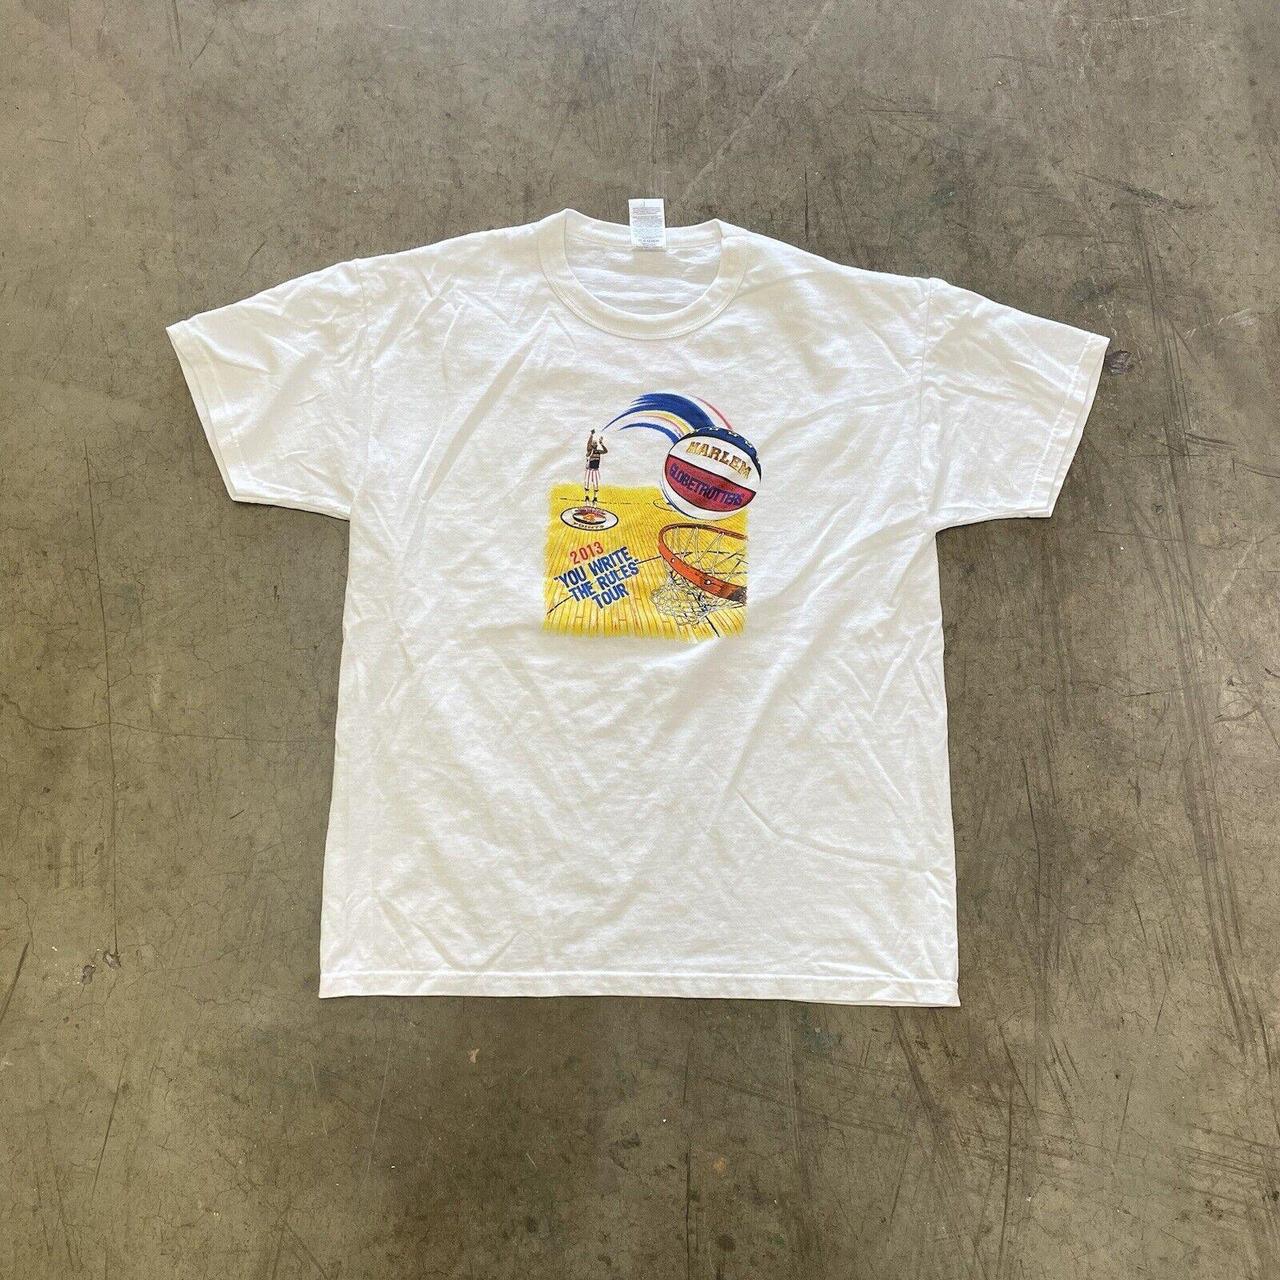 Harlem Globetrotters Graphic T-Shirt 90s Single... - Depop